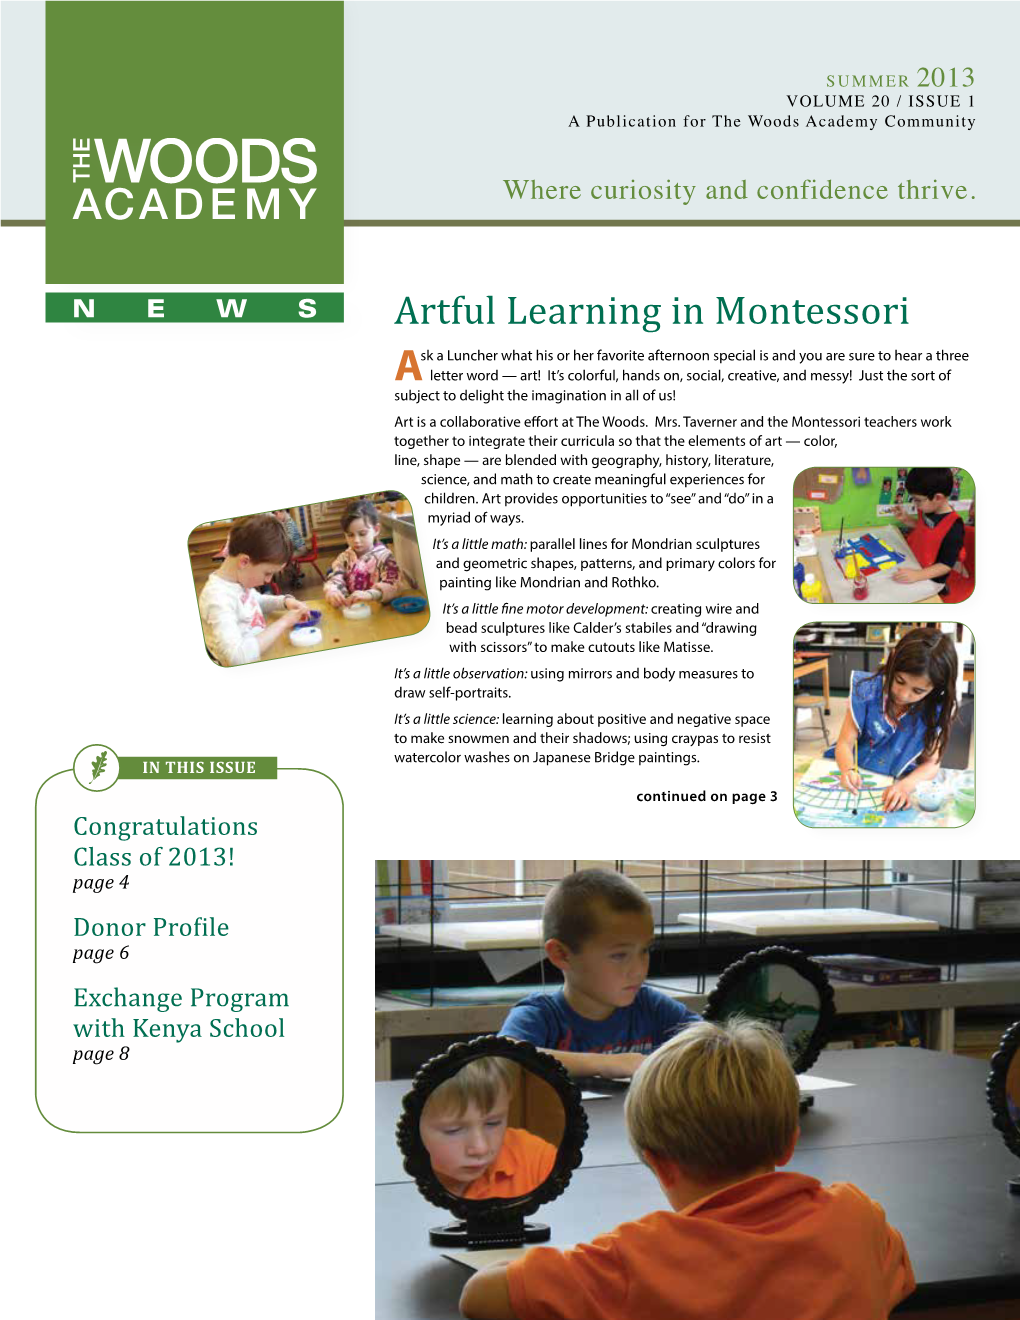 Artful Learning in Montessori